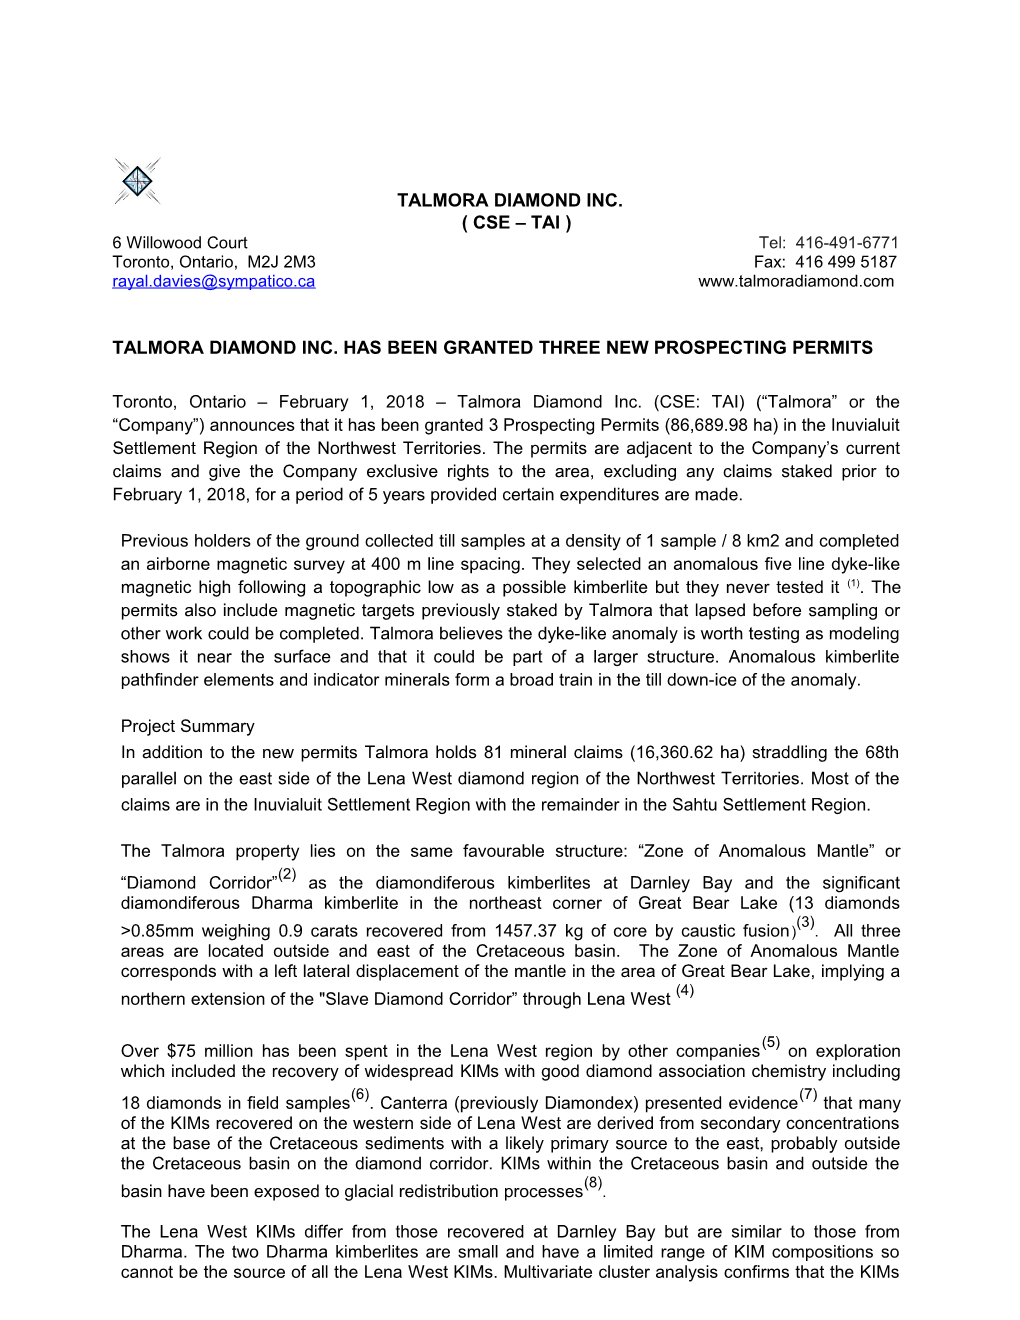 Talmora Diamond Inc. Has Been Granted Three New Prospecting Permits